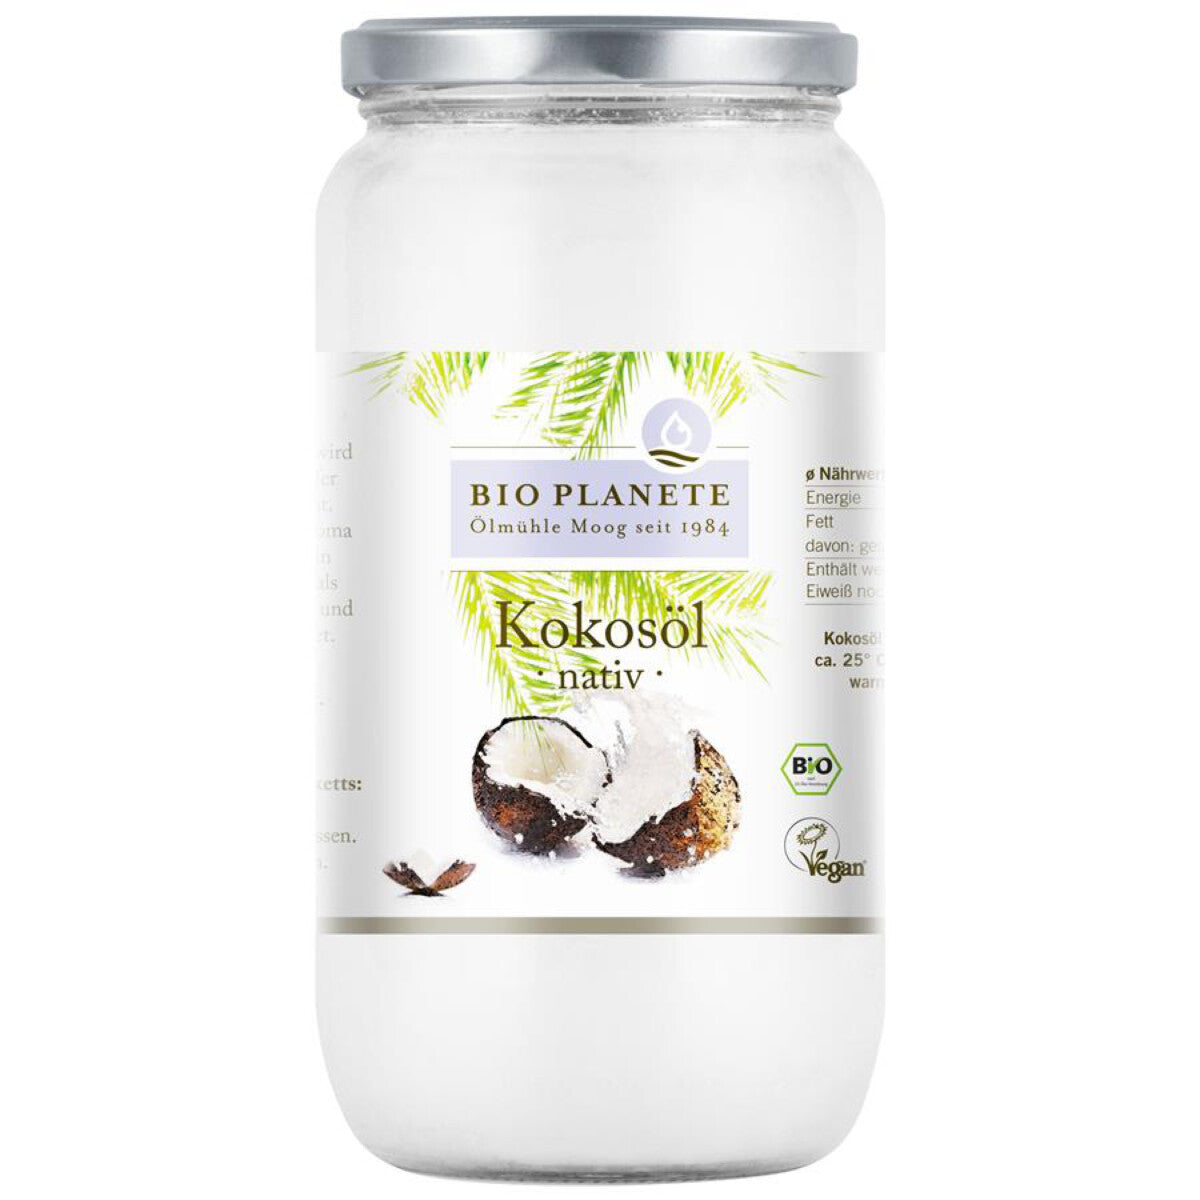 BIO PLANETE Gourmet Kokosöl nativ - 950 ml